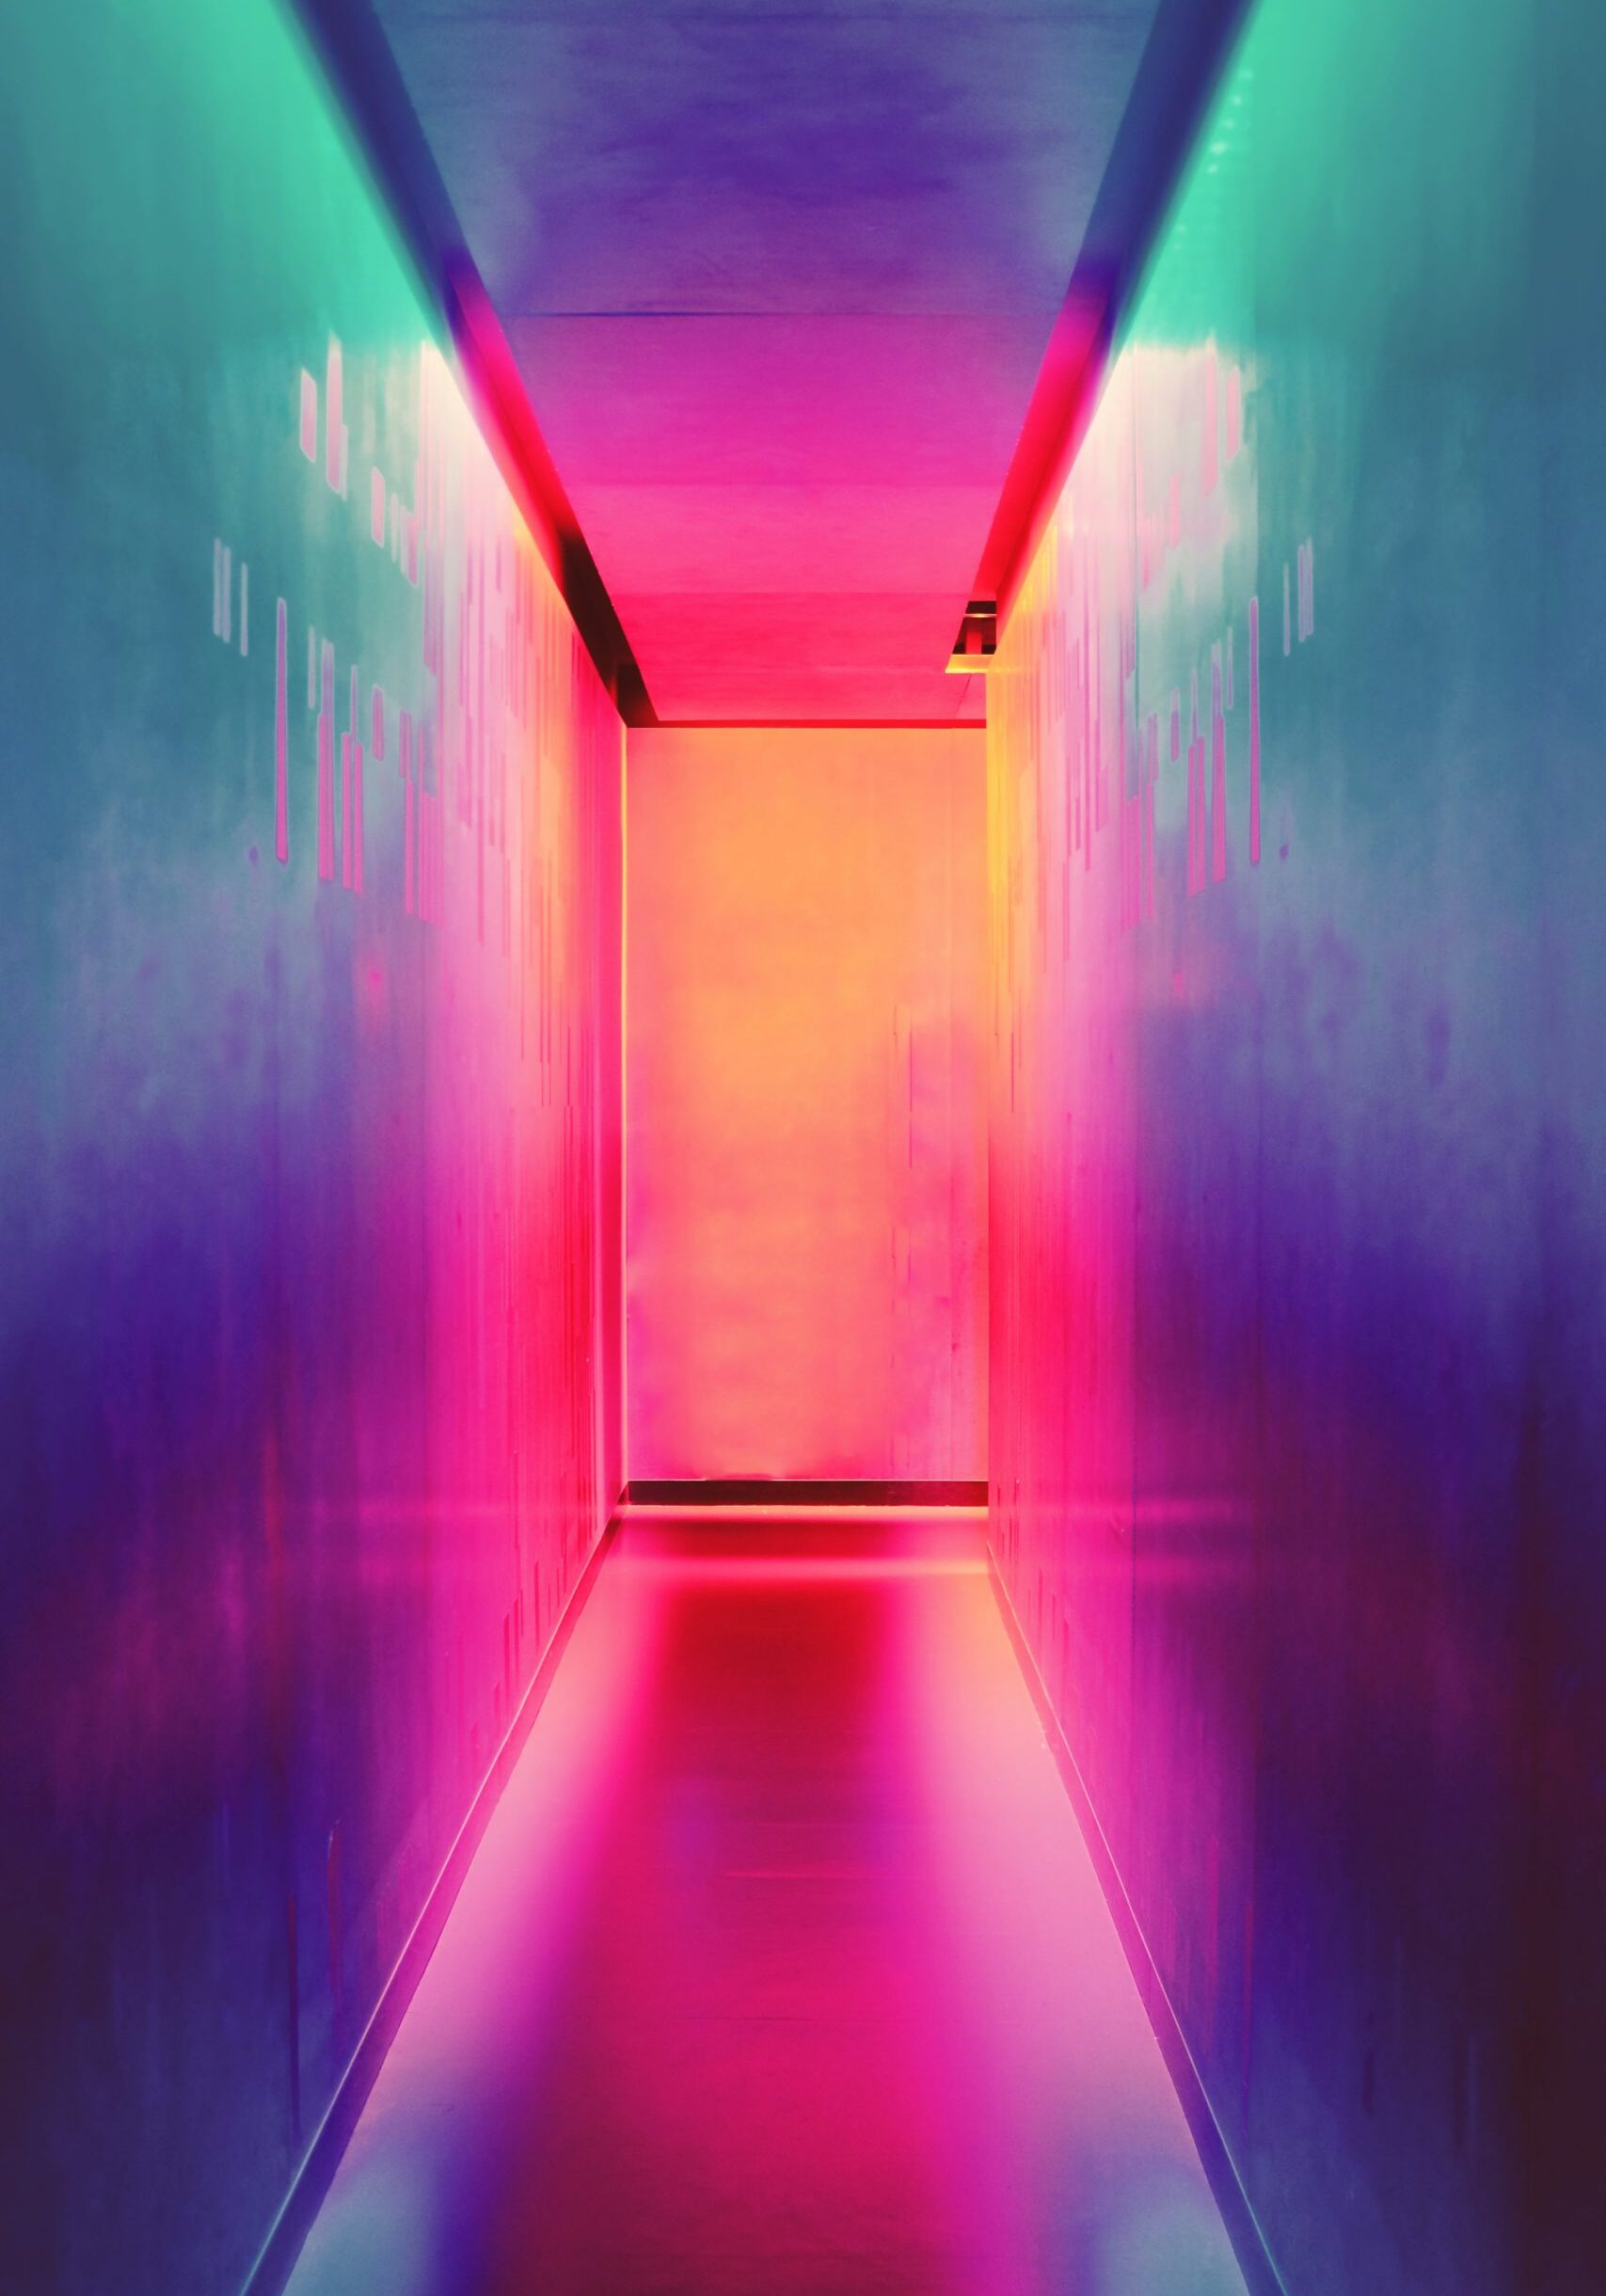 A colorful hallway